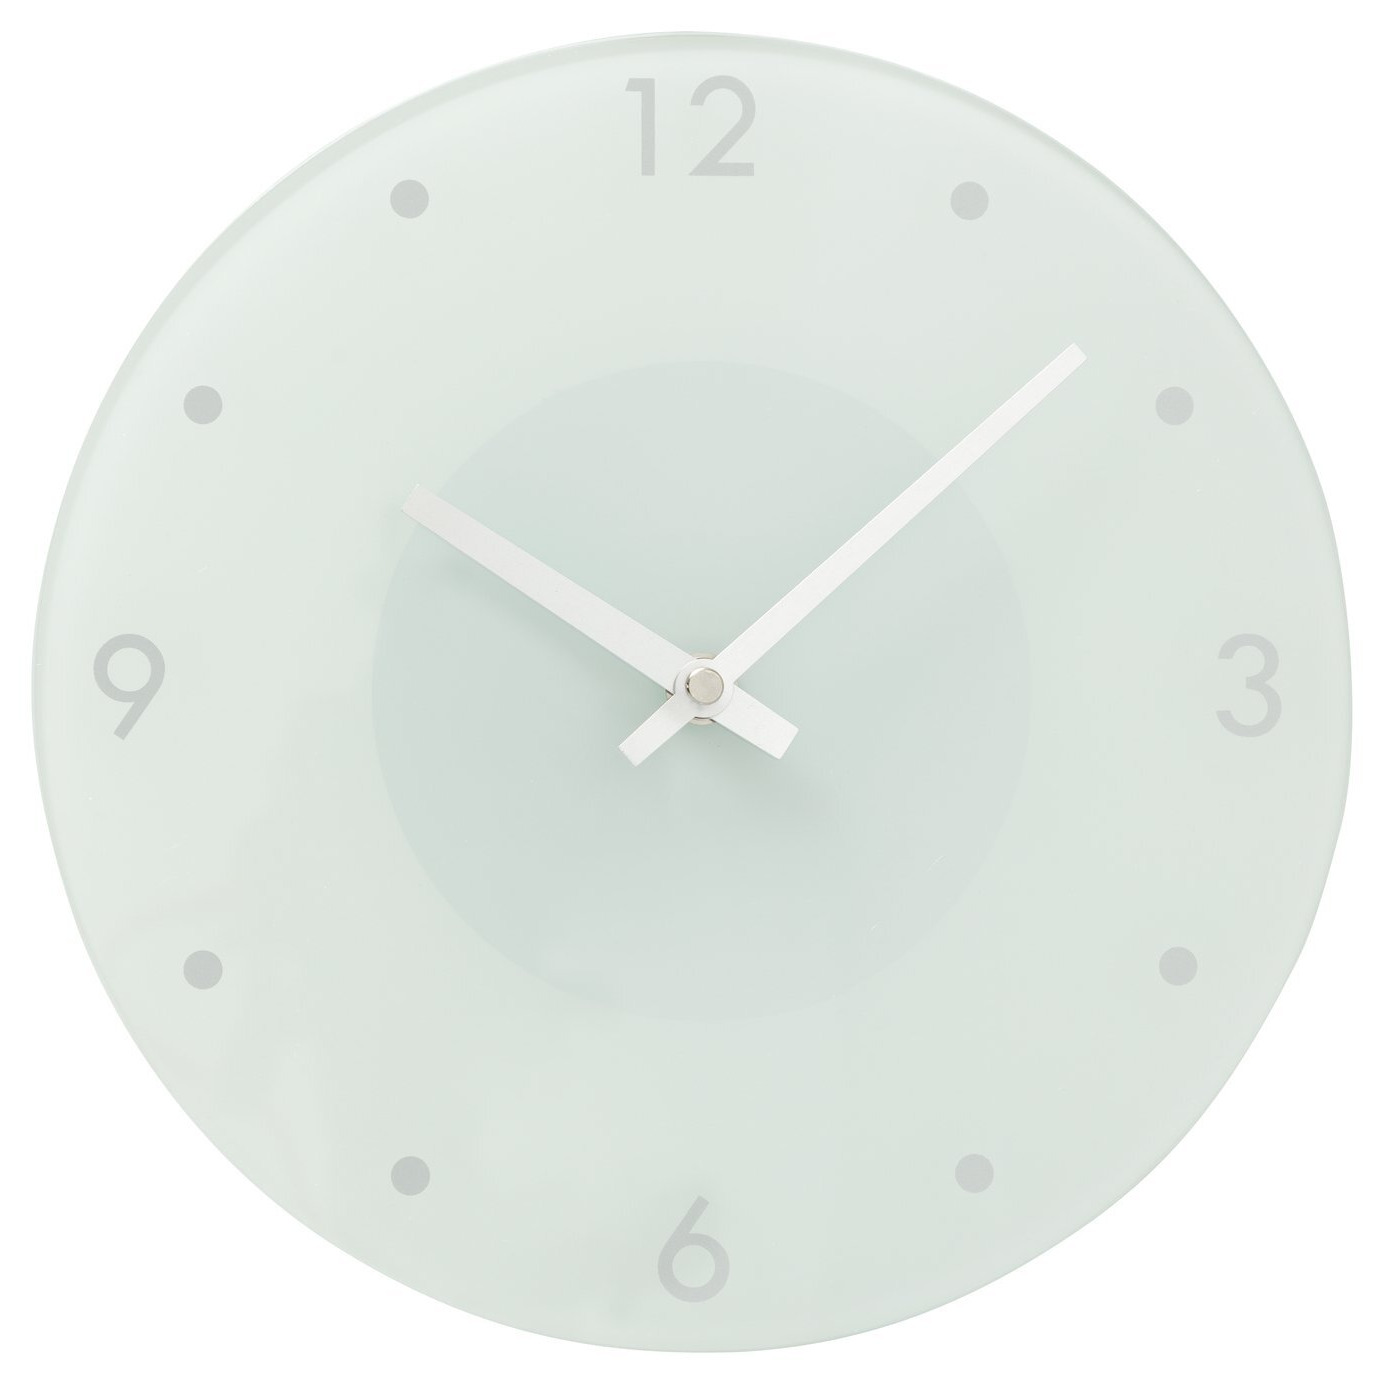 Argos Home Glass Wall Clock - White - image 1